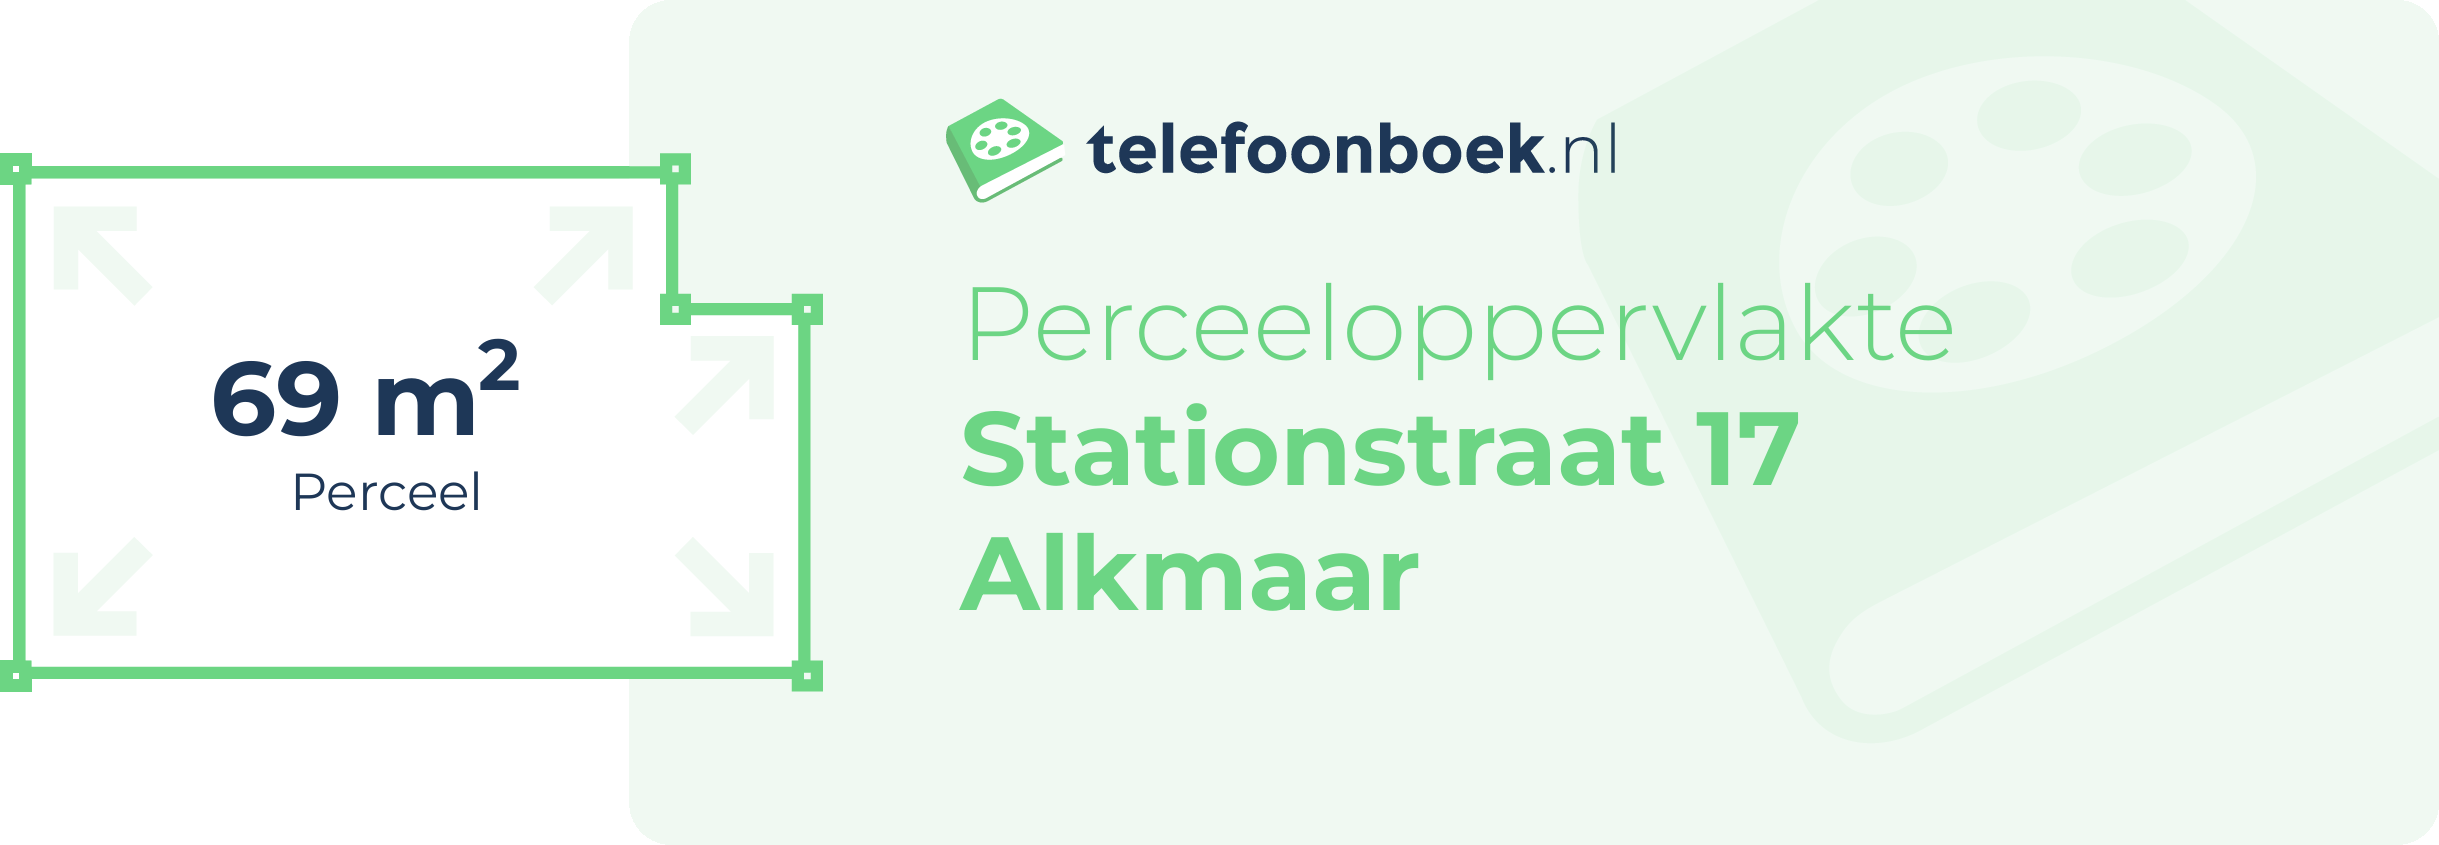 Perceeloppervlakte Stationstraat 17 Alkmaar